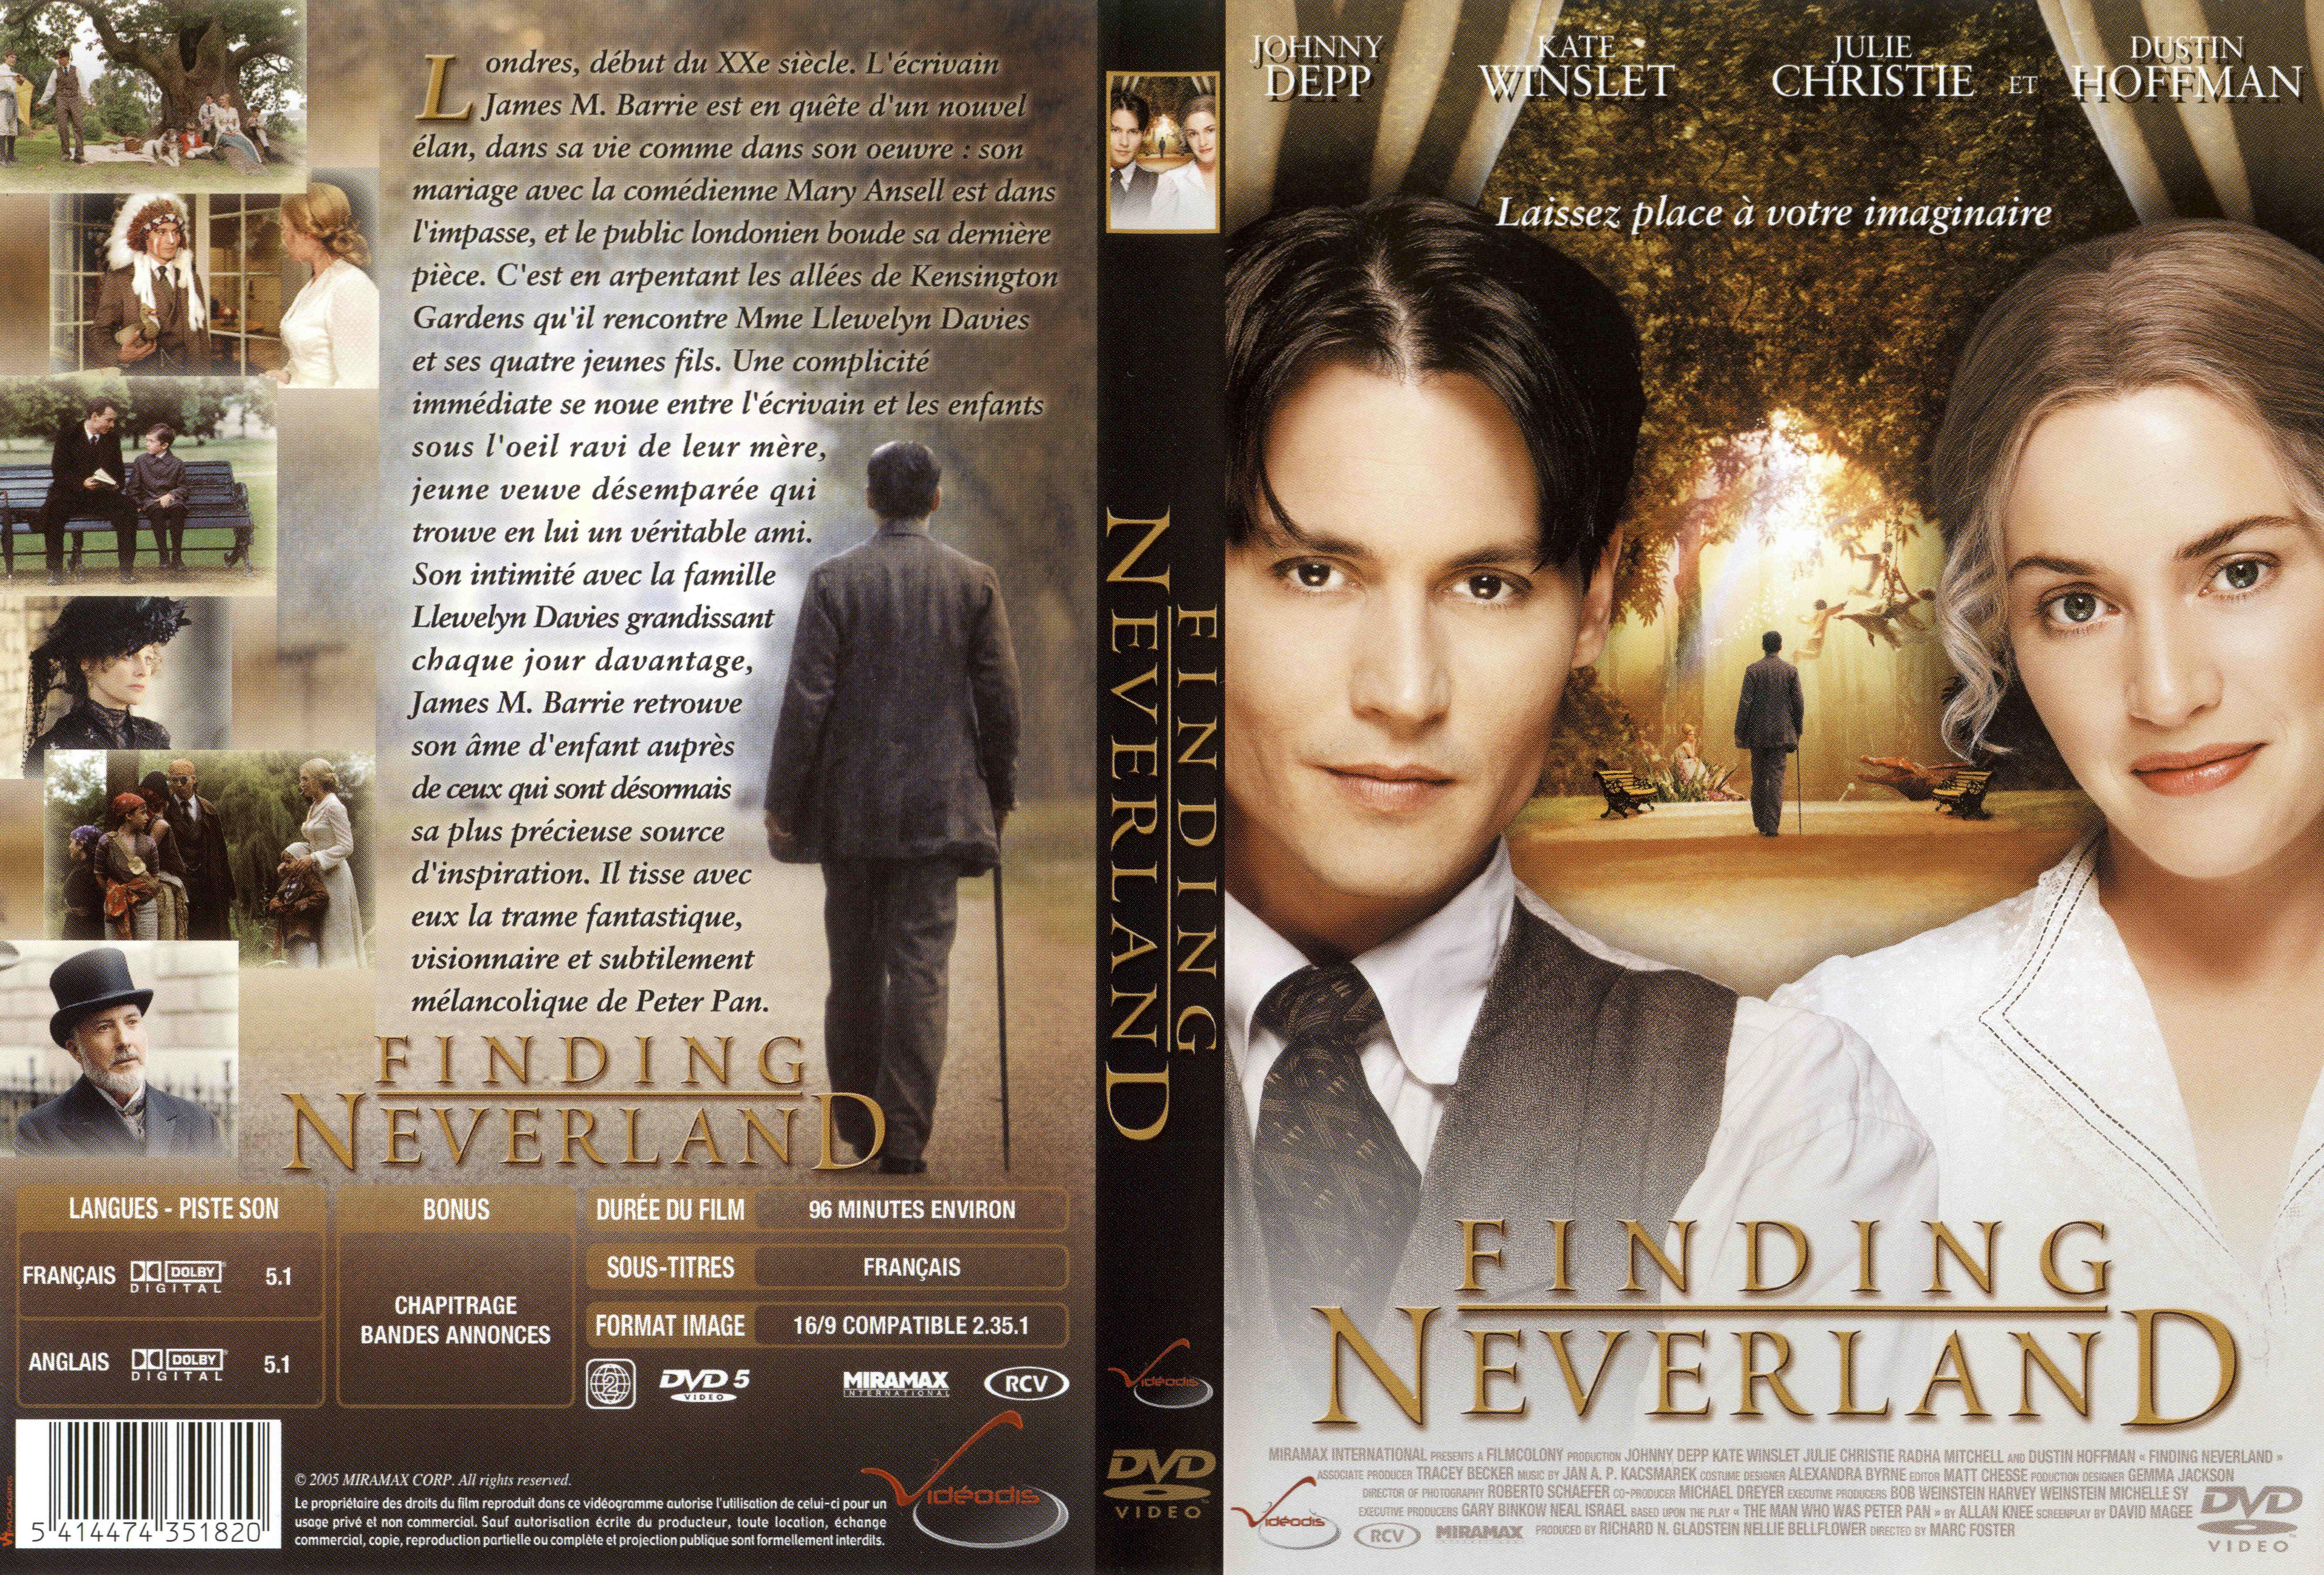 Jaquette DVD Finding neverland